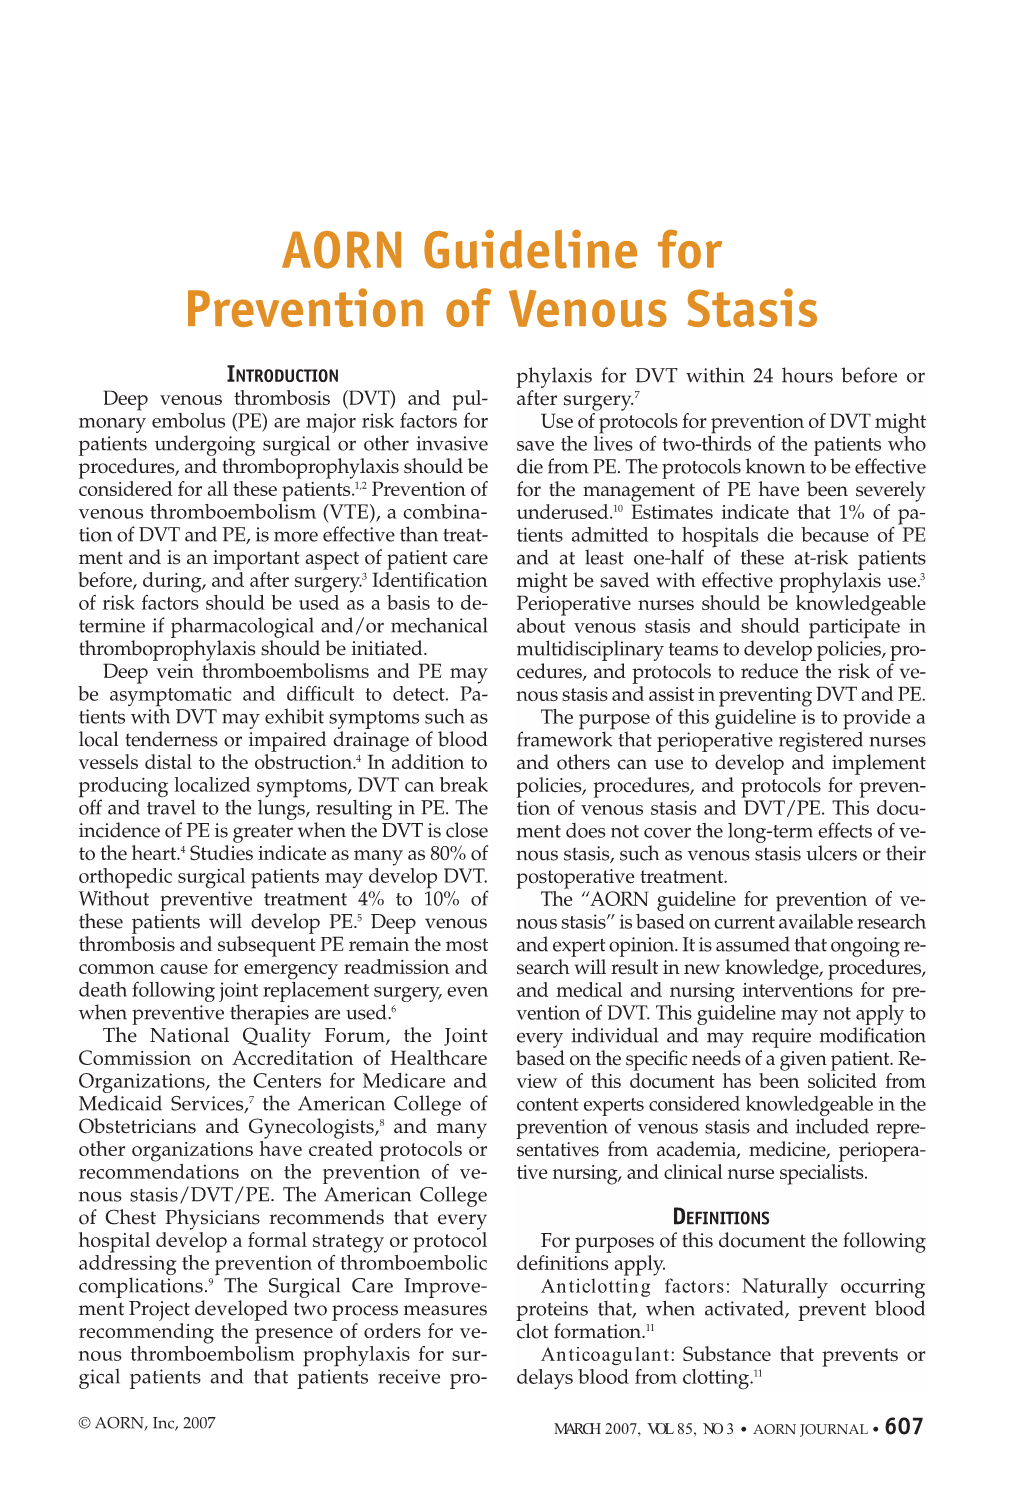 AORN Guideline for Prevention of Venous Stasis